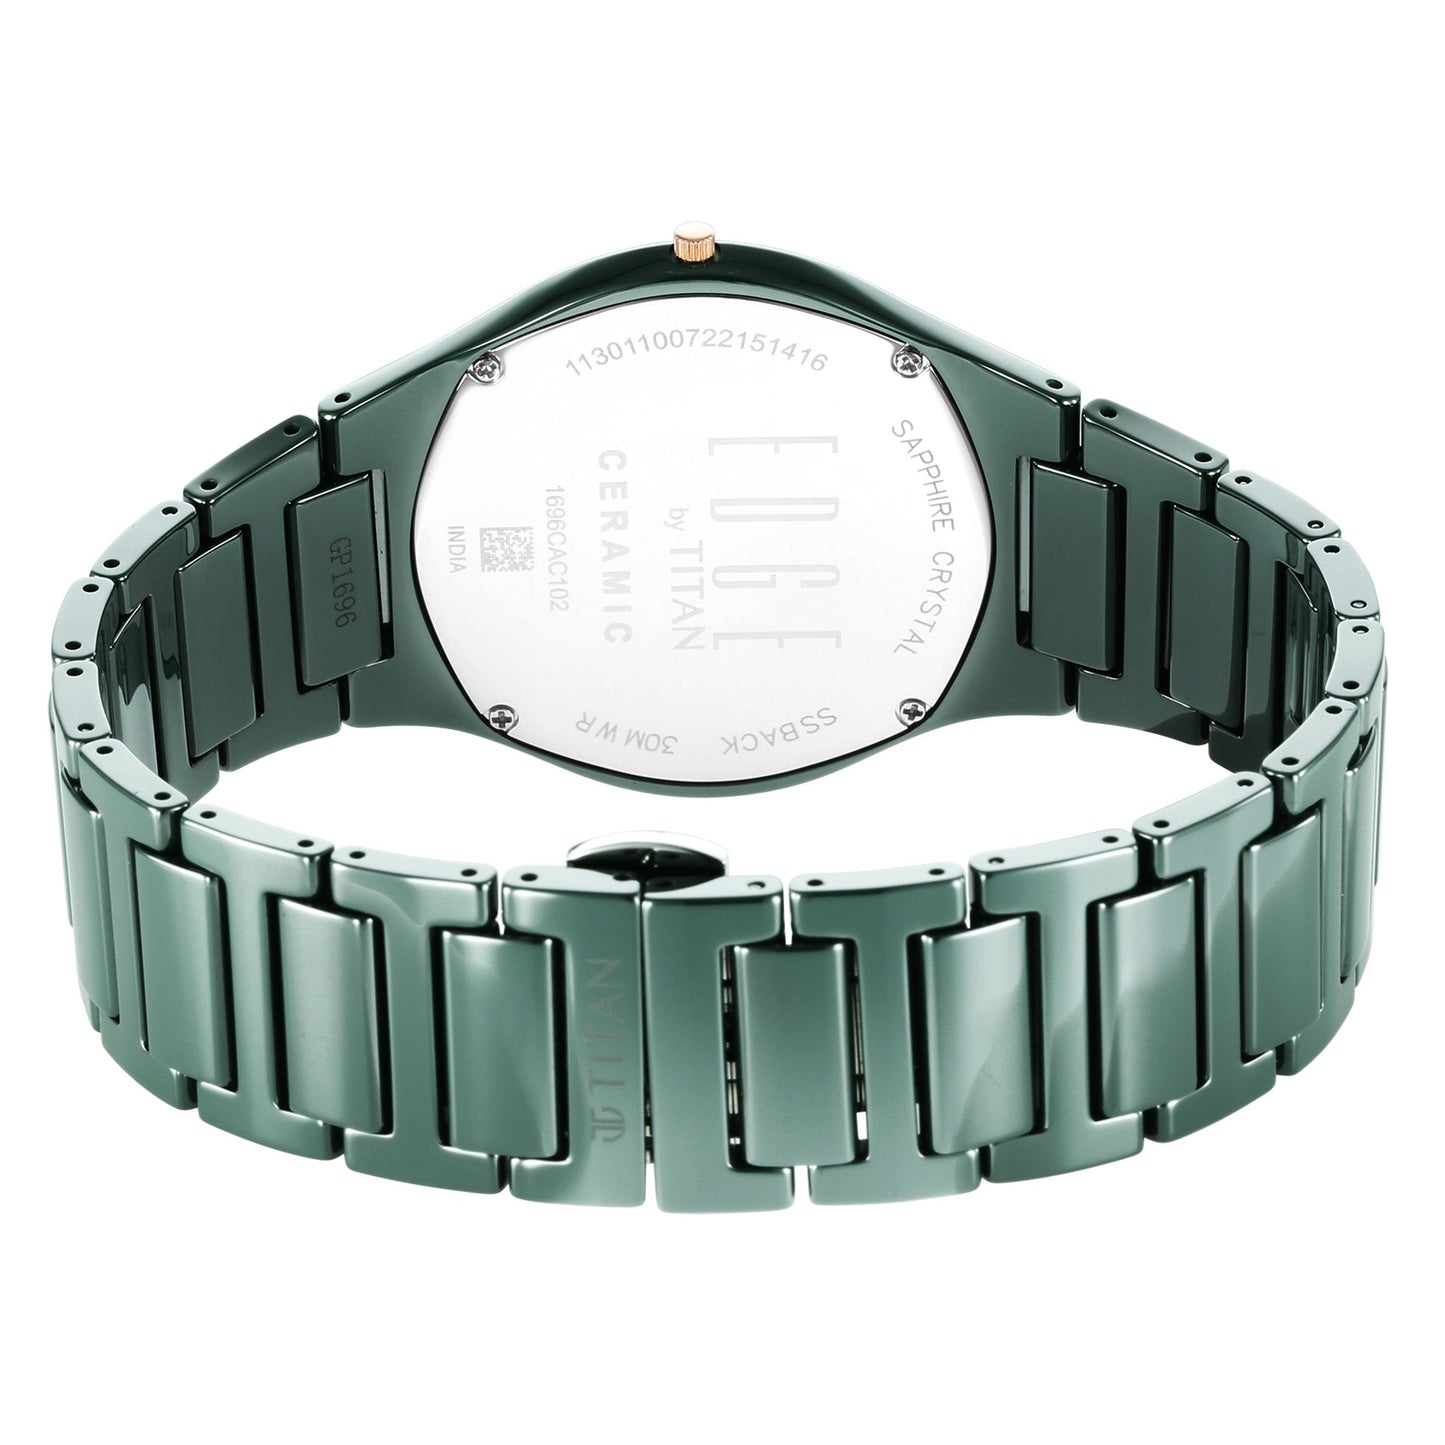 Titan Edge Ceramic Green Dial Analog Ceramic Strap watch for Men